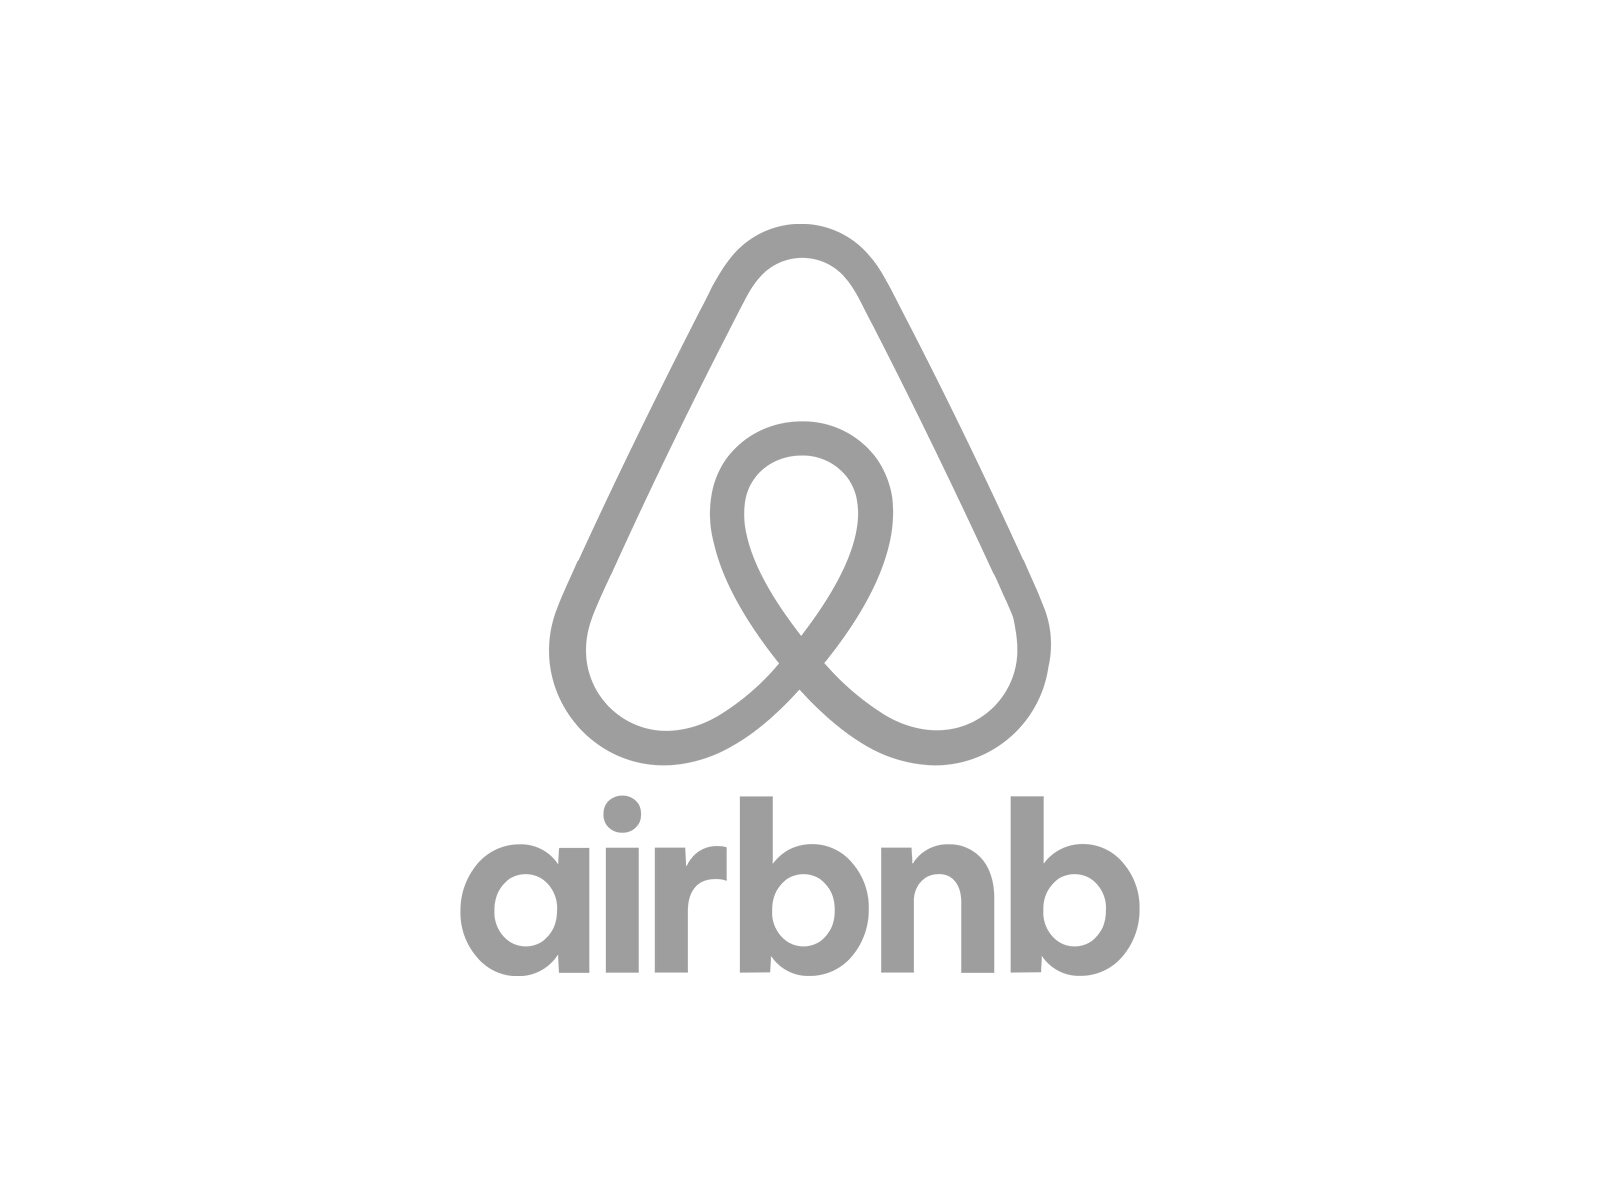 CLients-NB-airbnb.jpg